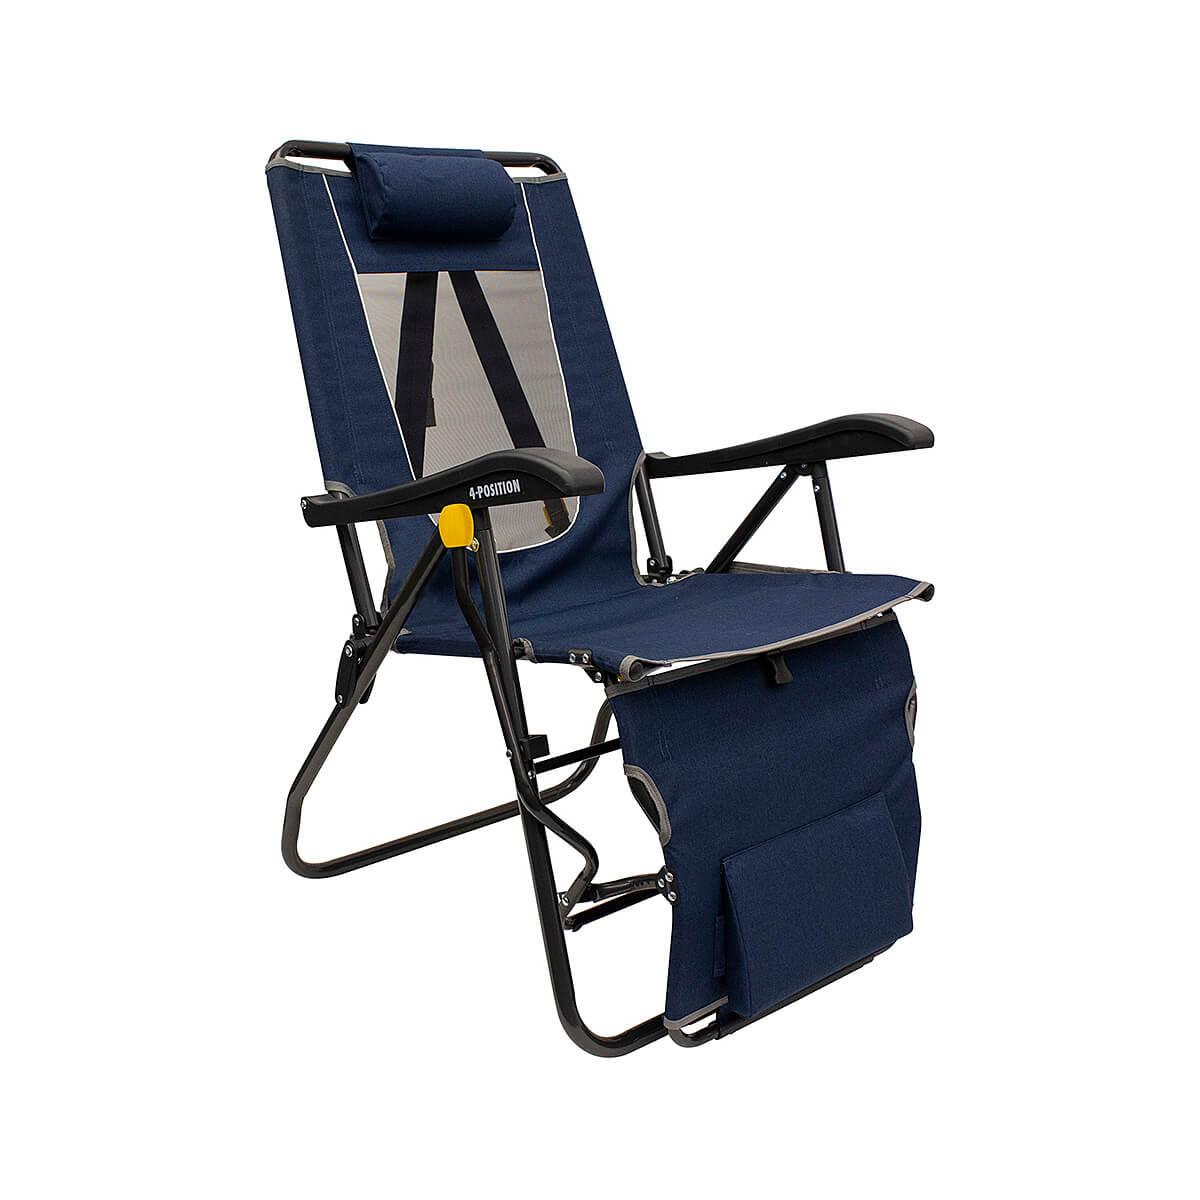  Legz- Up- Lounger Chair